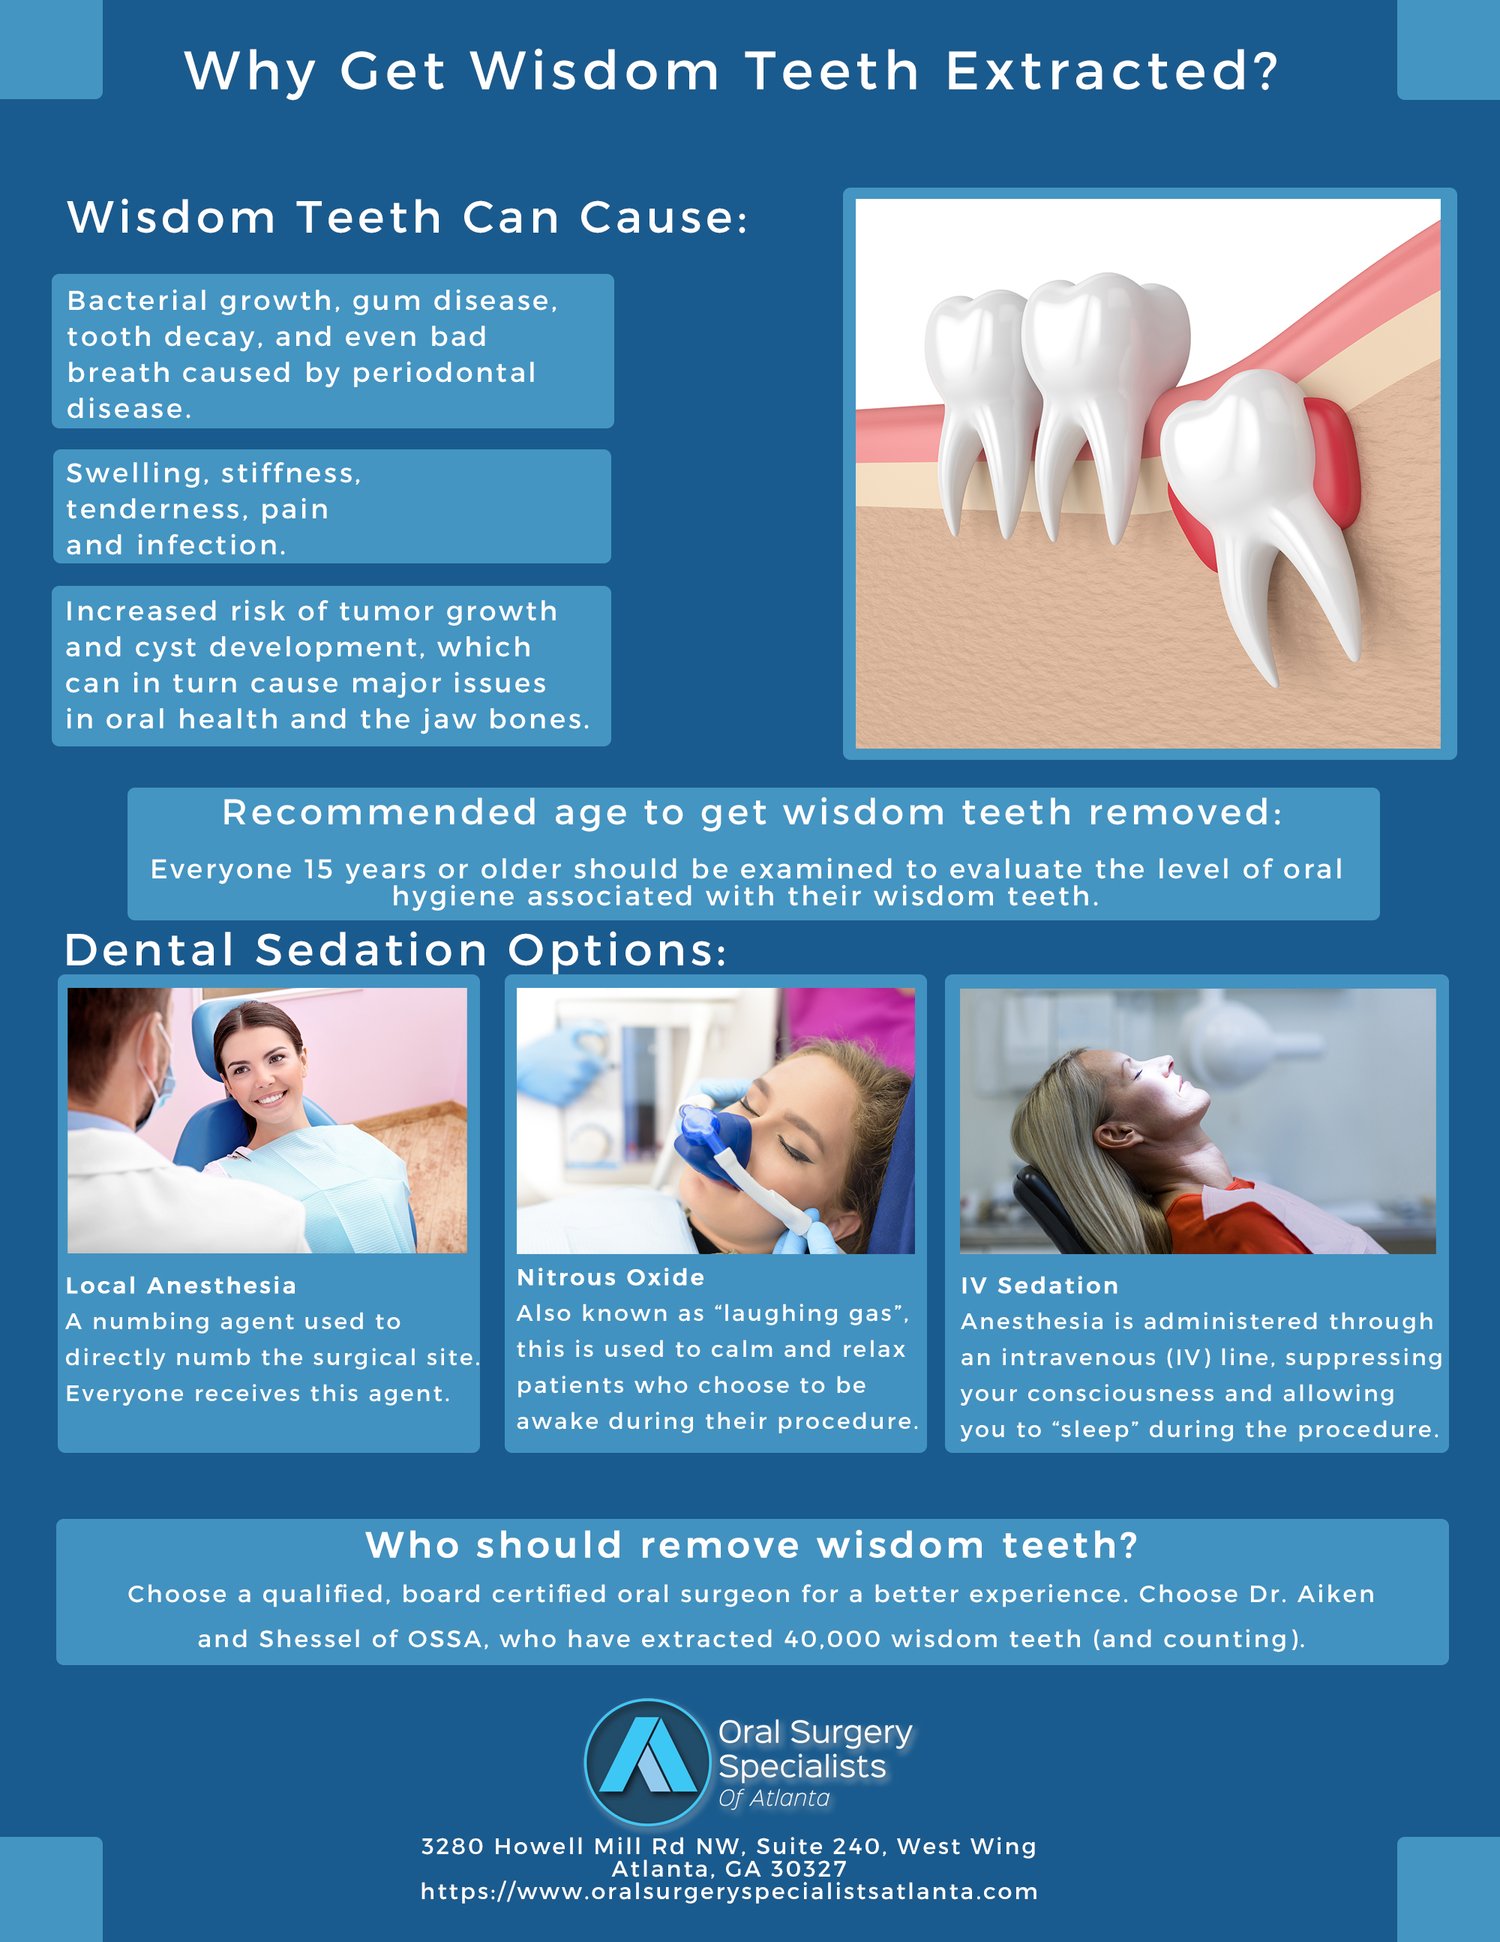 Is Wisdom Teeth Medical or Dental?